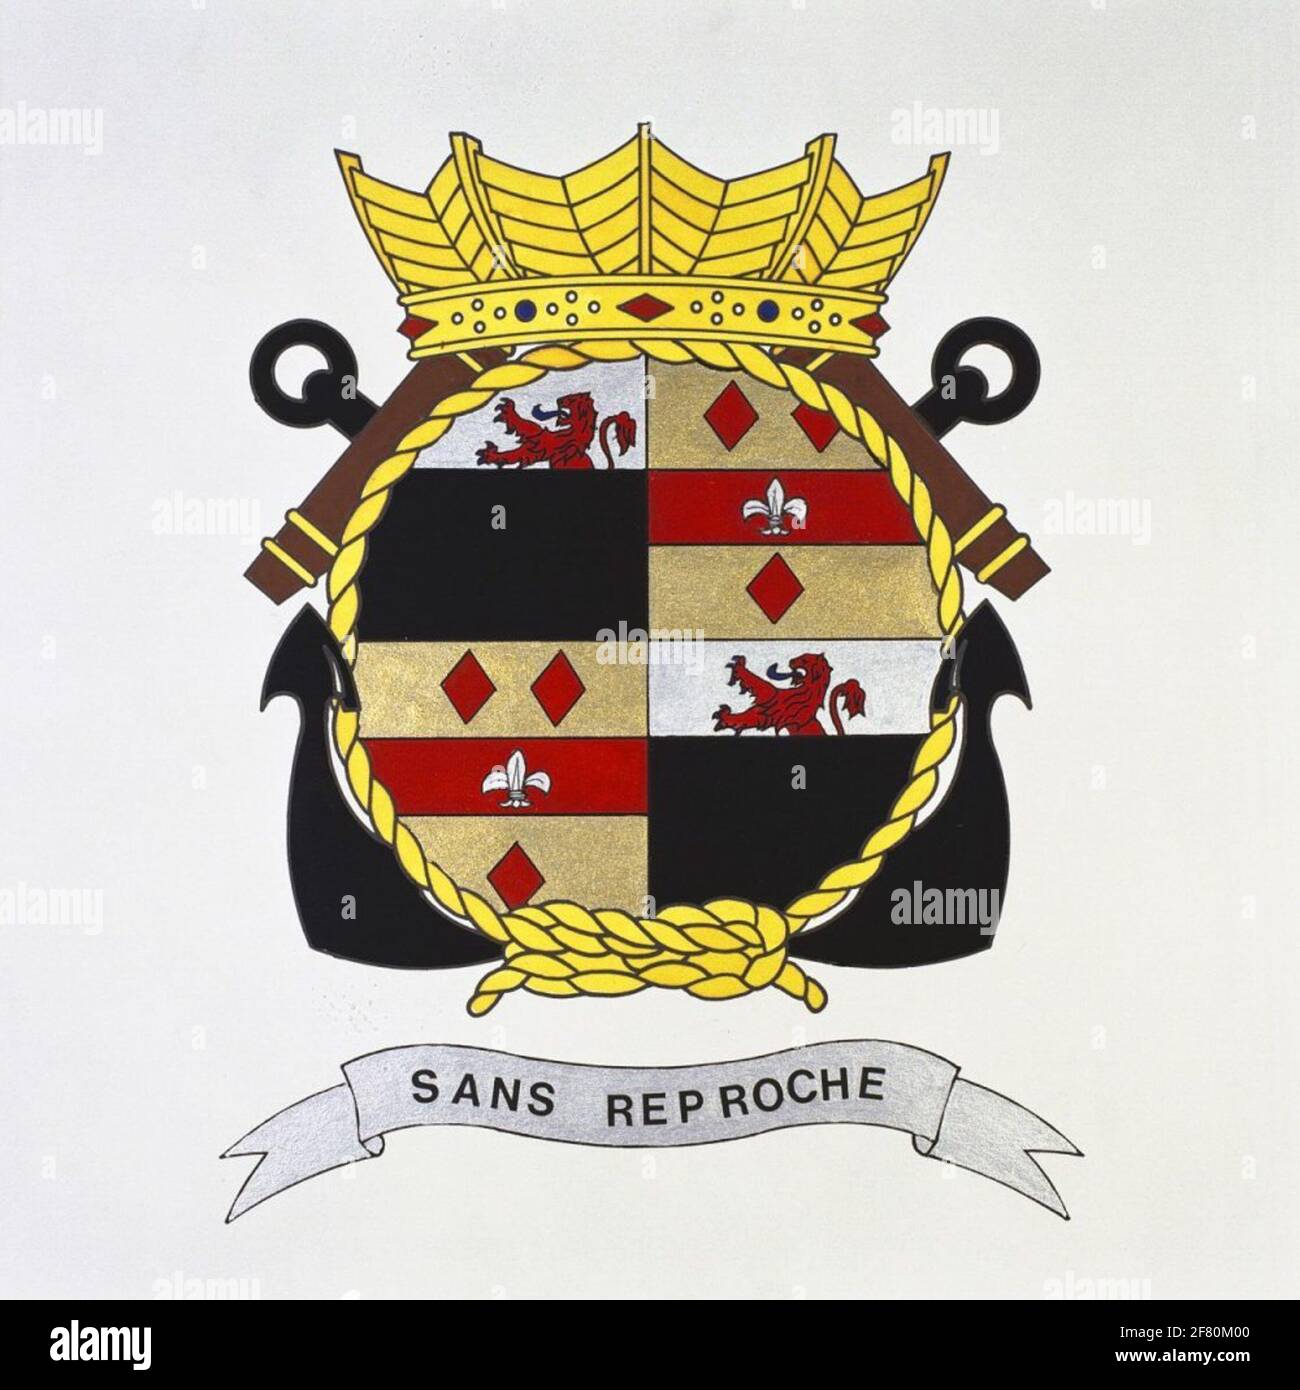 Octrooi Soldaat huichelarij Van Braam Houckgeestkazerne (VBHKAZ) / Group of operational units of  Marines (GOEM). Logo shows the family crest of the General Major der  Mariniers titular f.a. from Braam Houckgeest (1837-1922), which was  commander